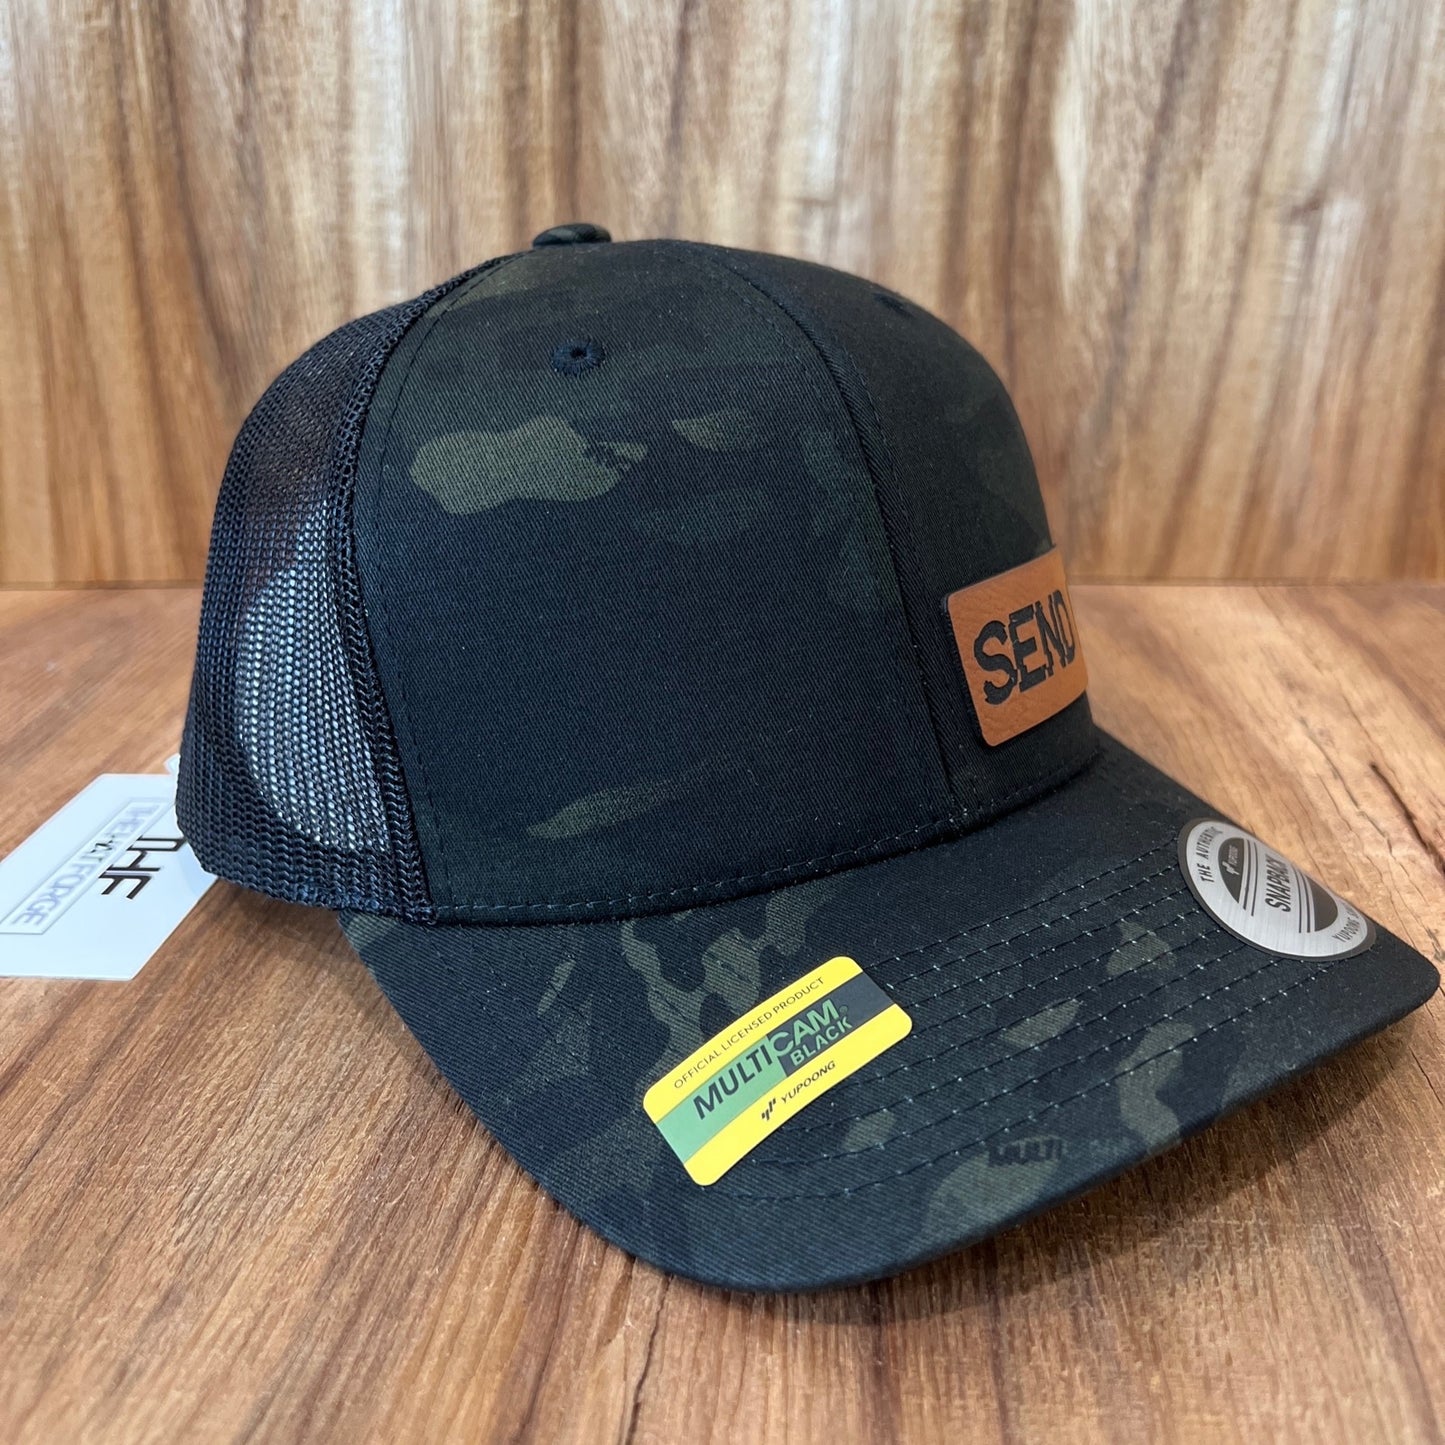 SEND IT - MultiCam® Black Yupoong SnapBack Trucker Hat